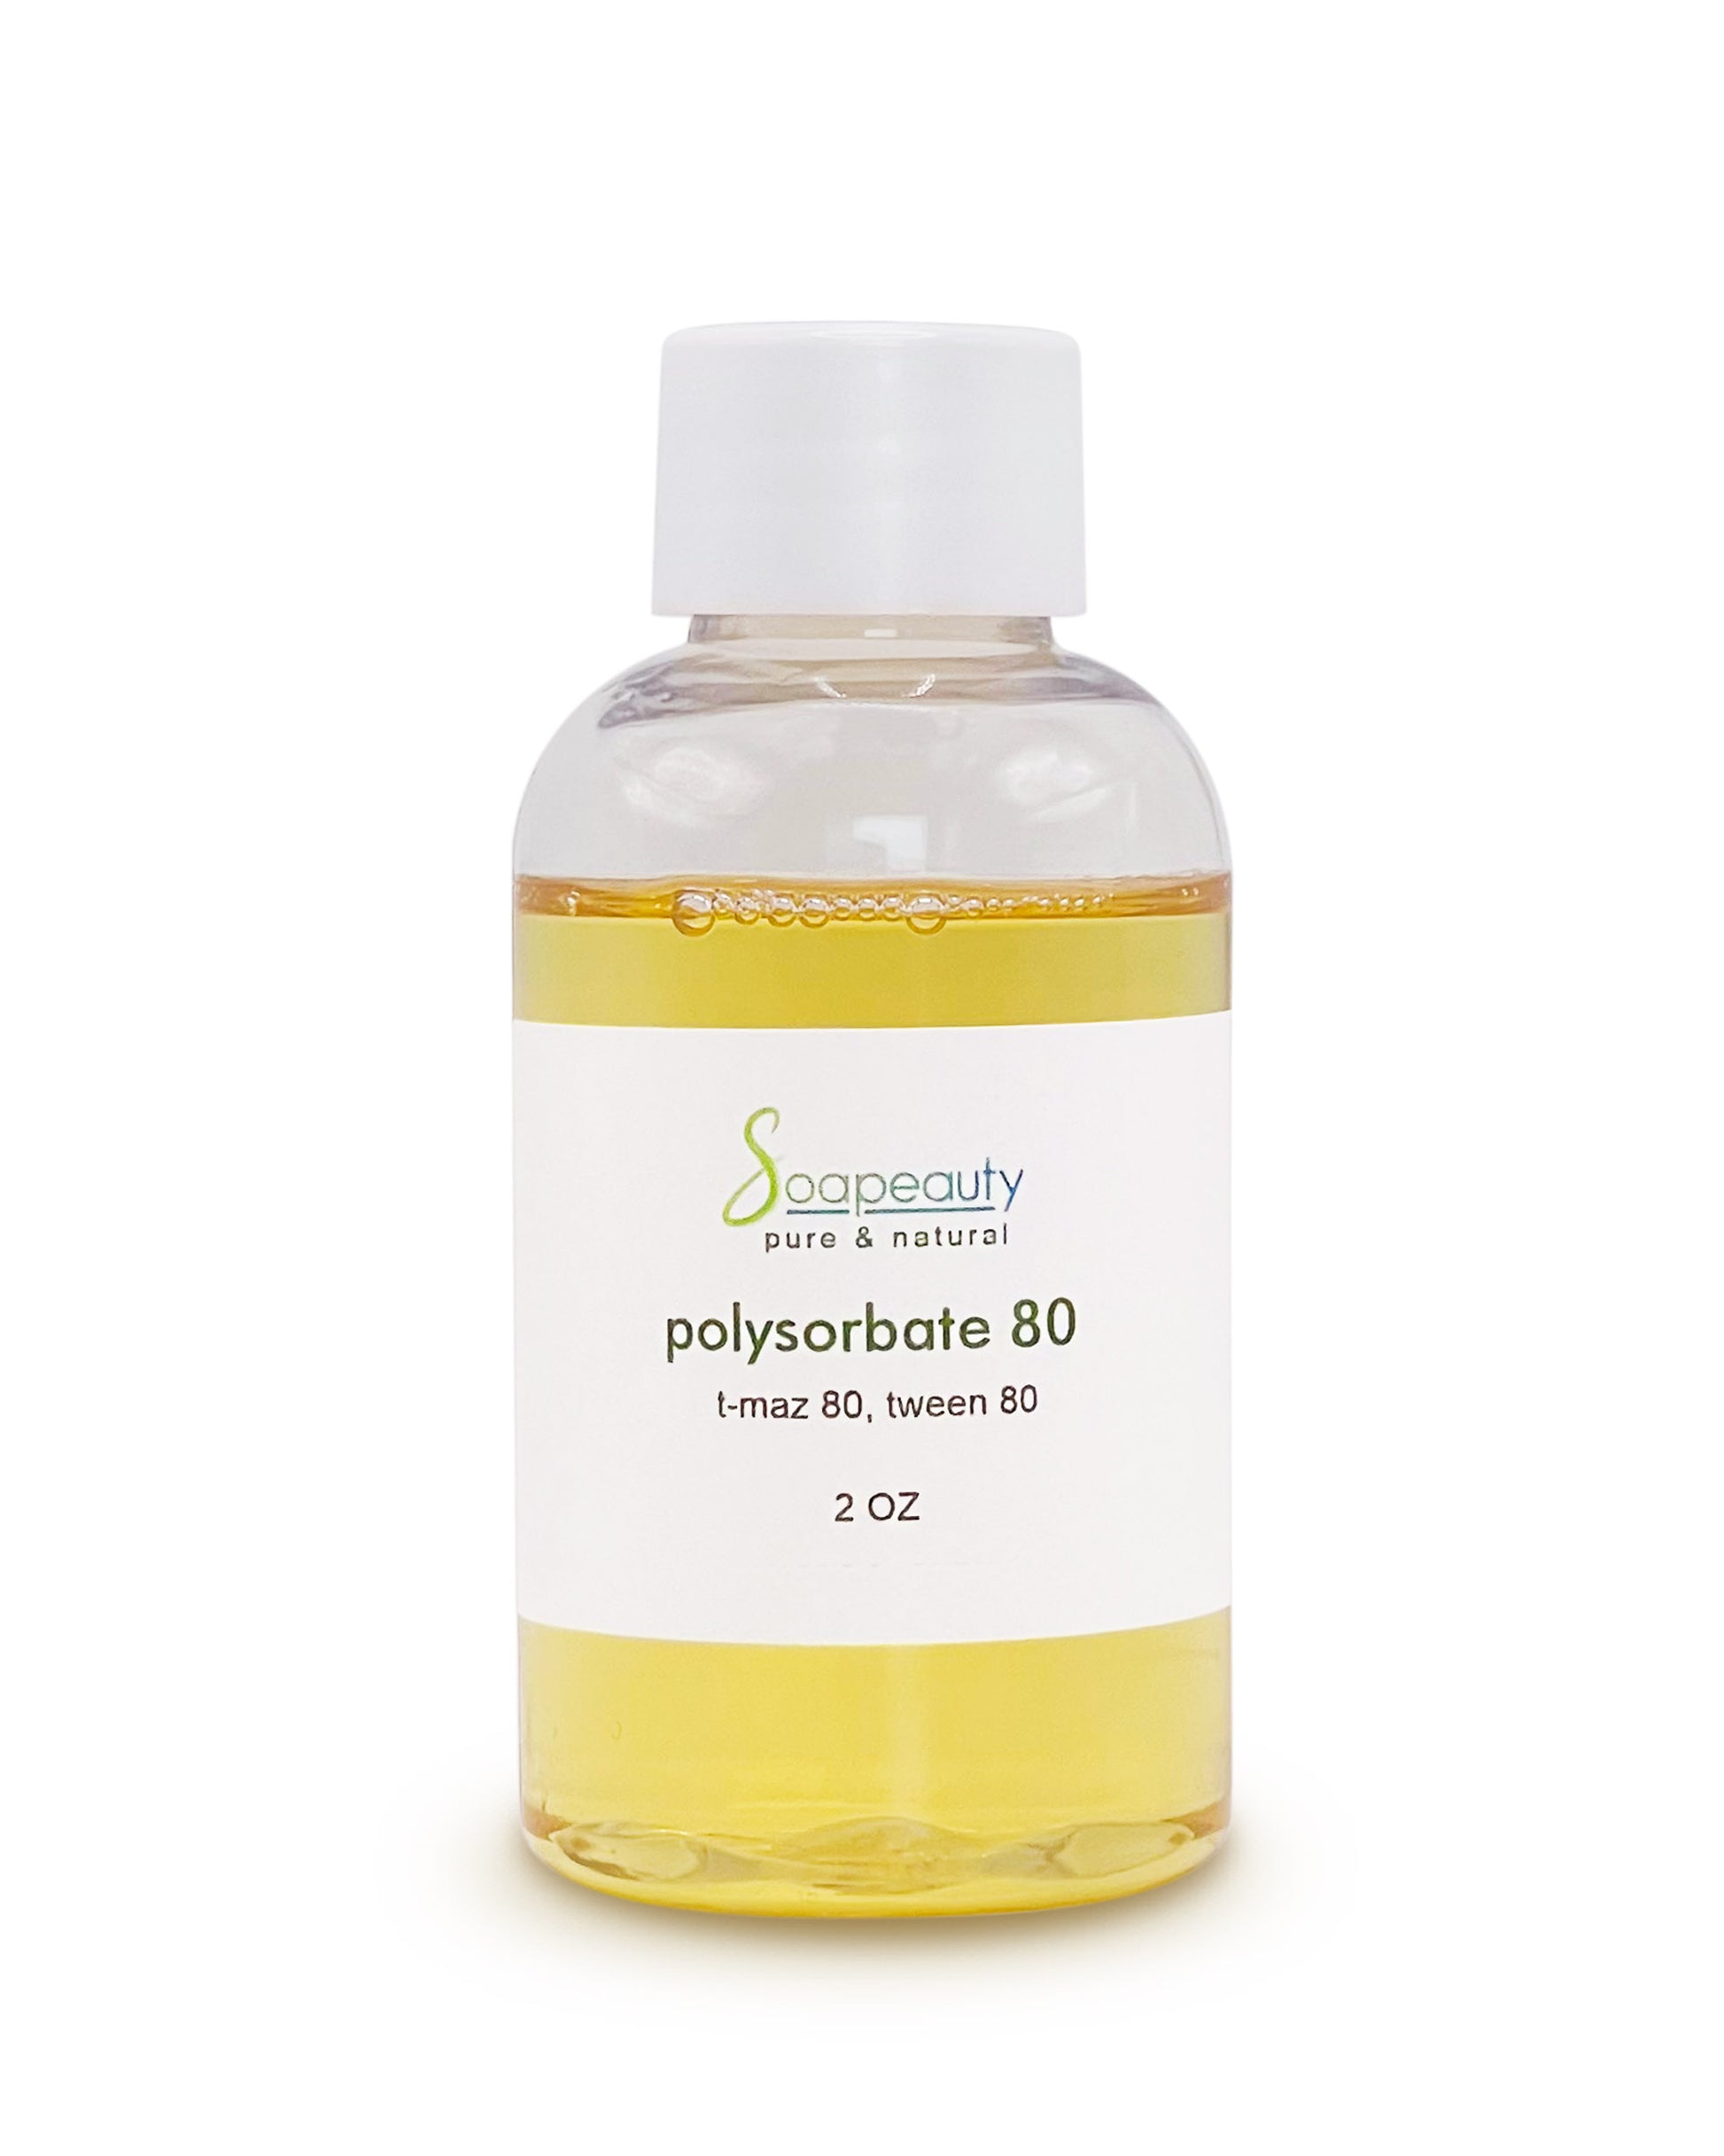 Emulsifying Wax NF Polysorbate 60 – Soapeauty